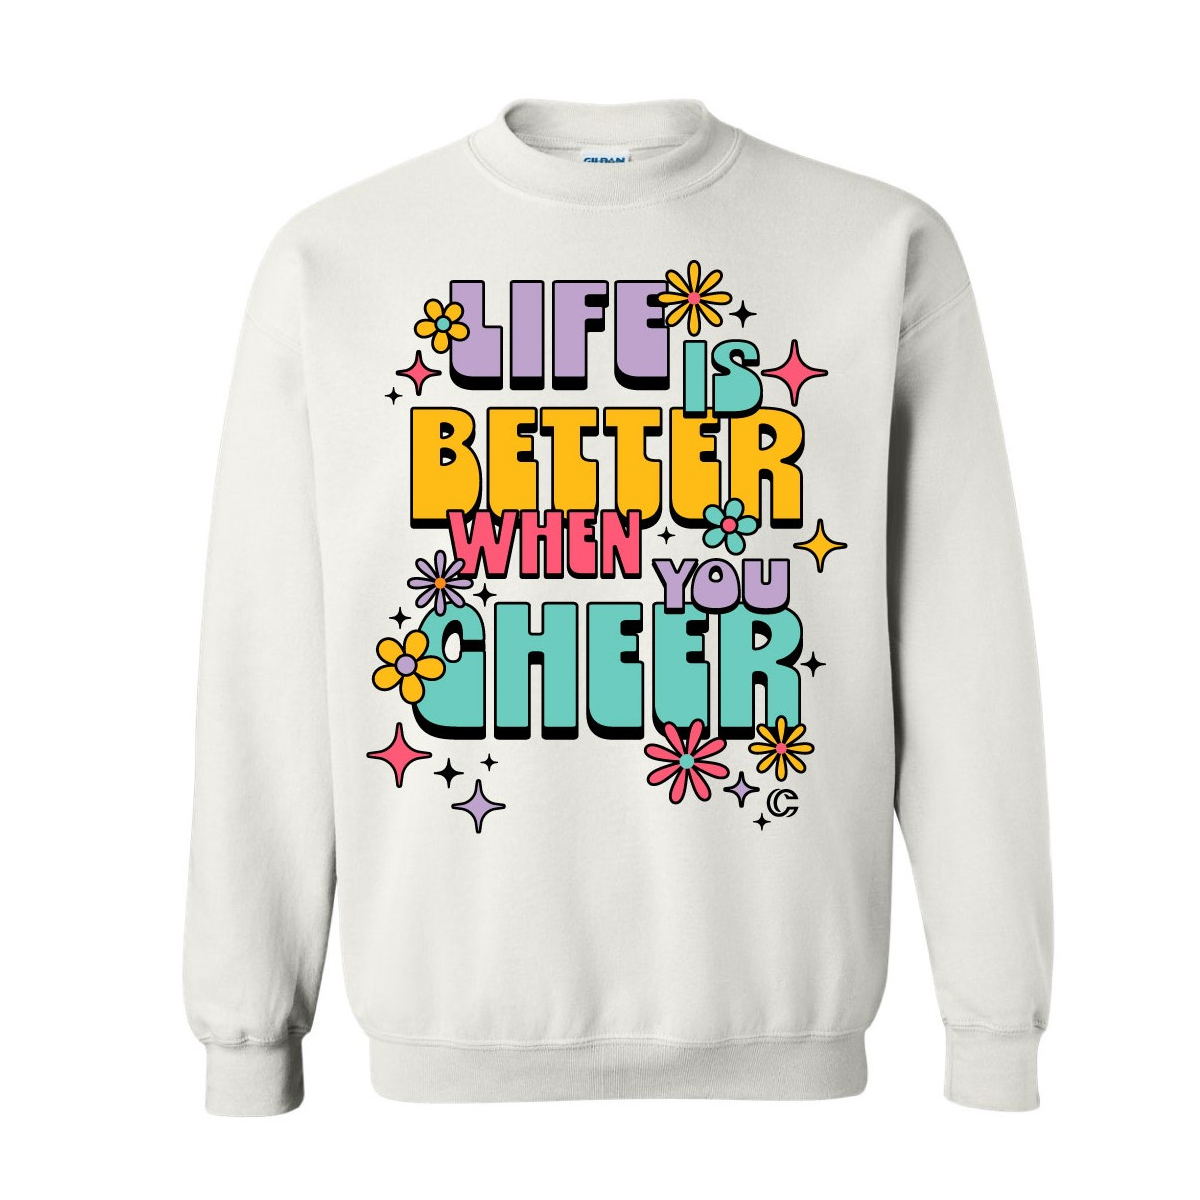 Limited Edition Cheer Sweatshirt